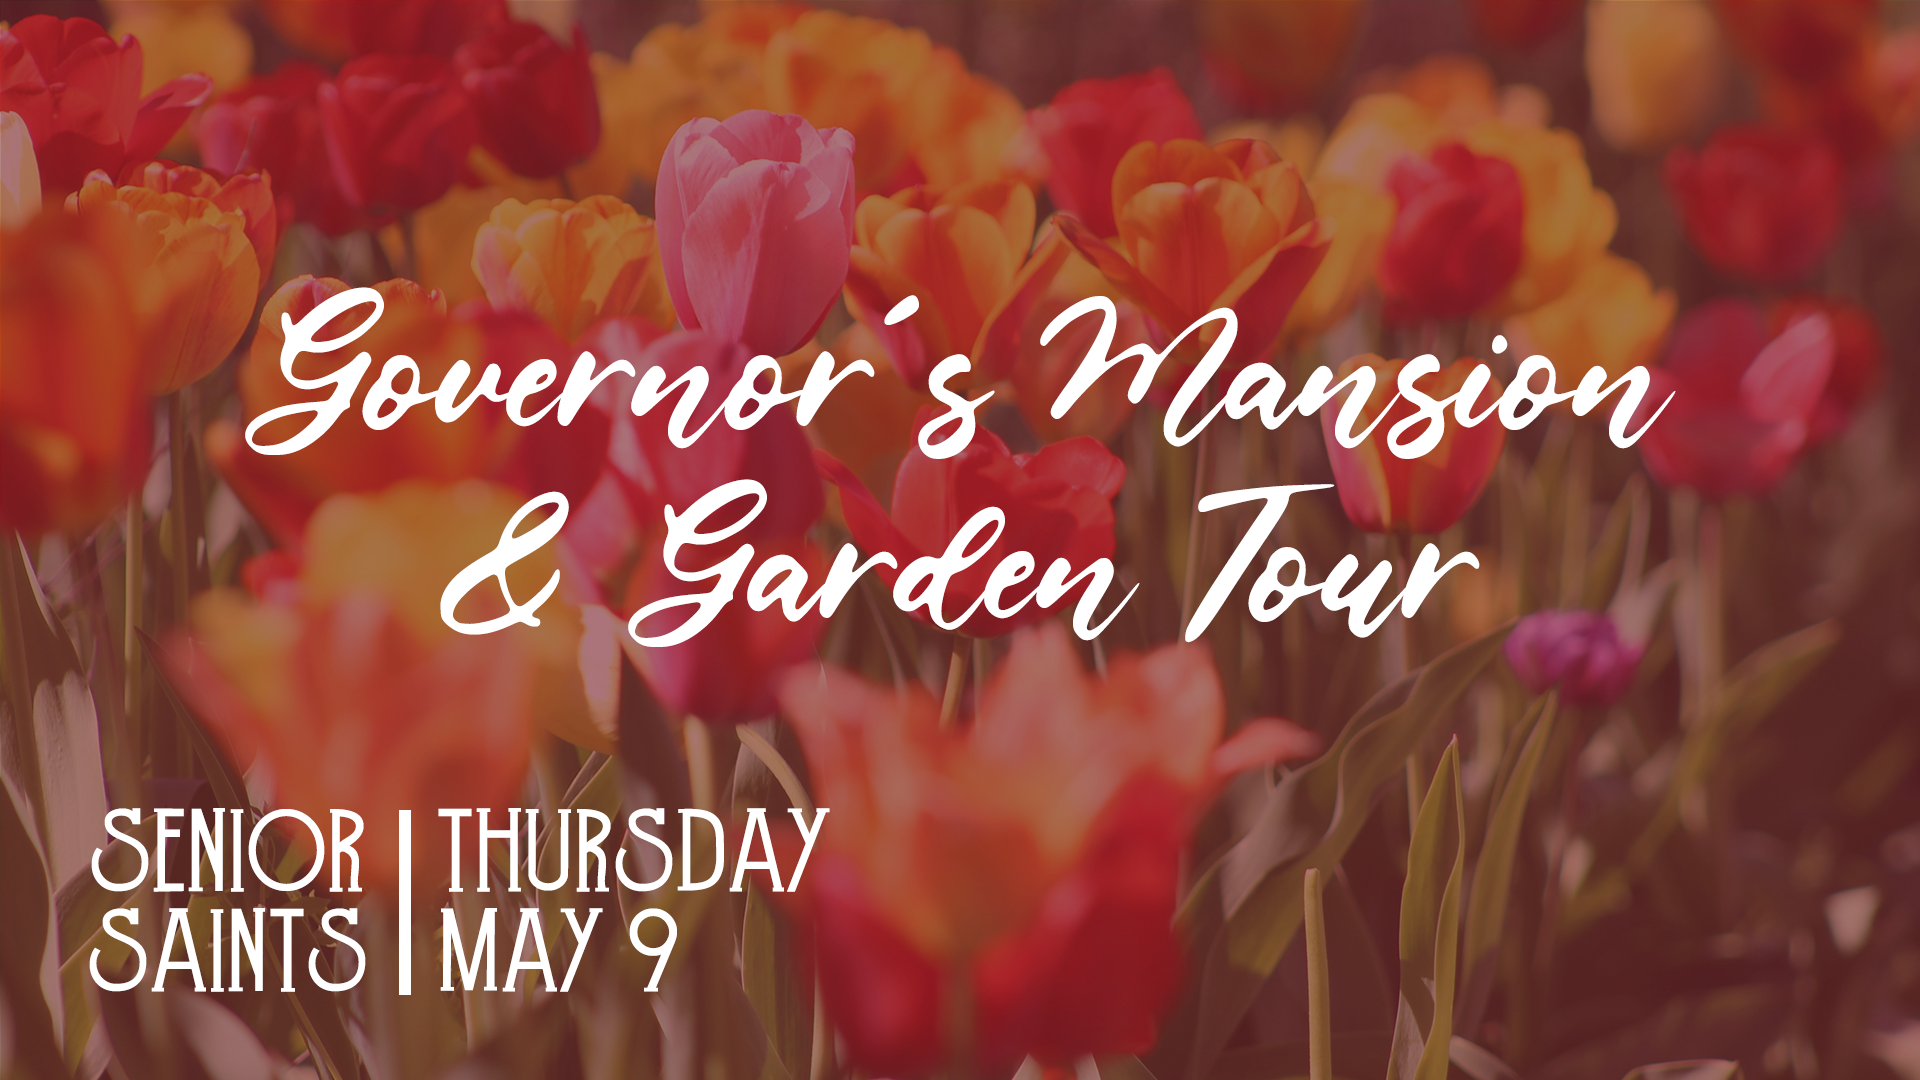 Senior Saints: Governor’s Mansion & Gardens Tour